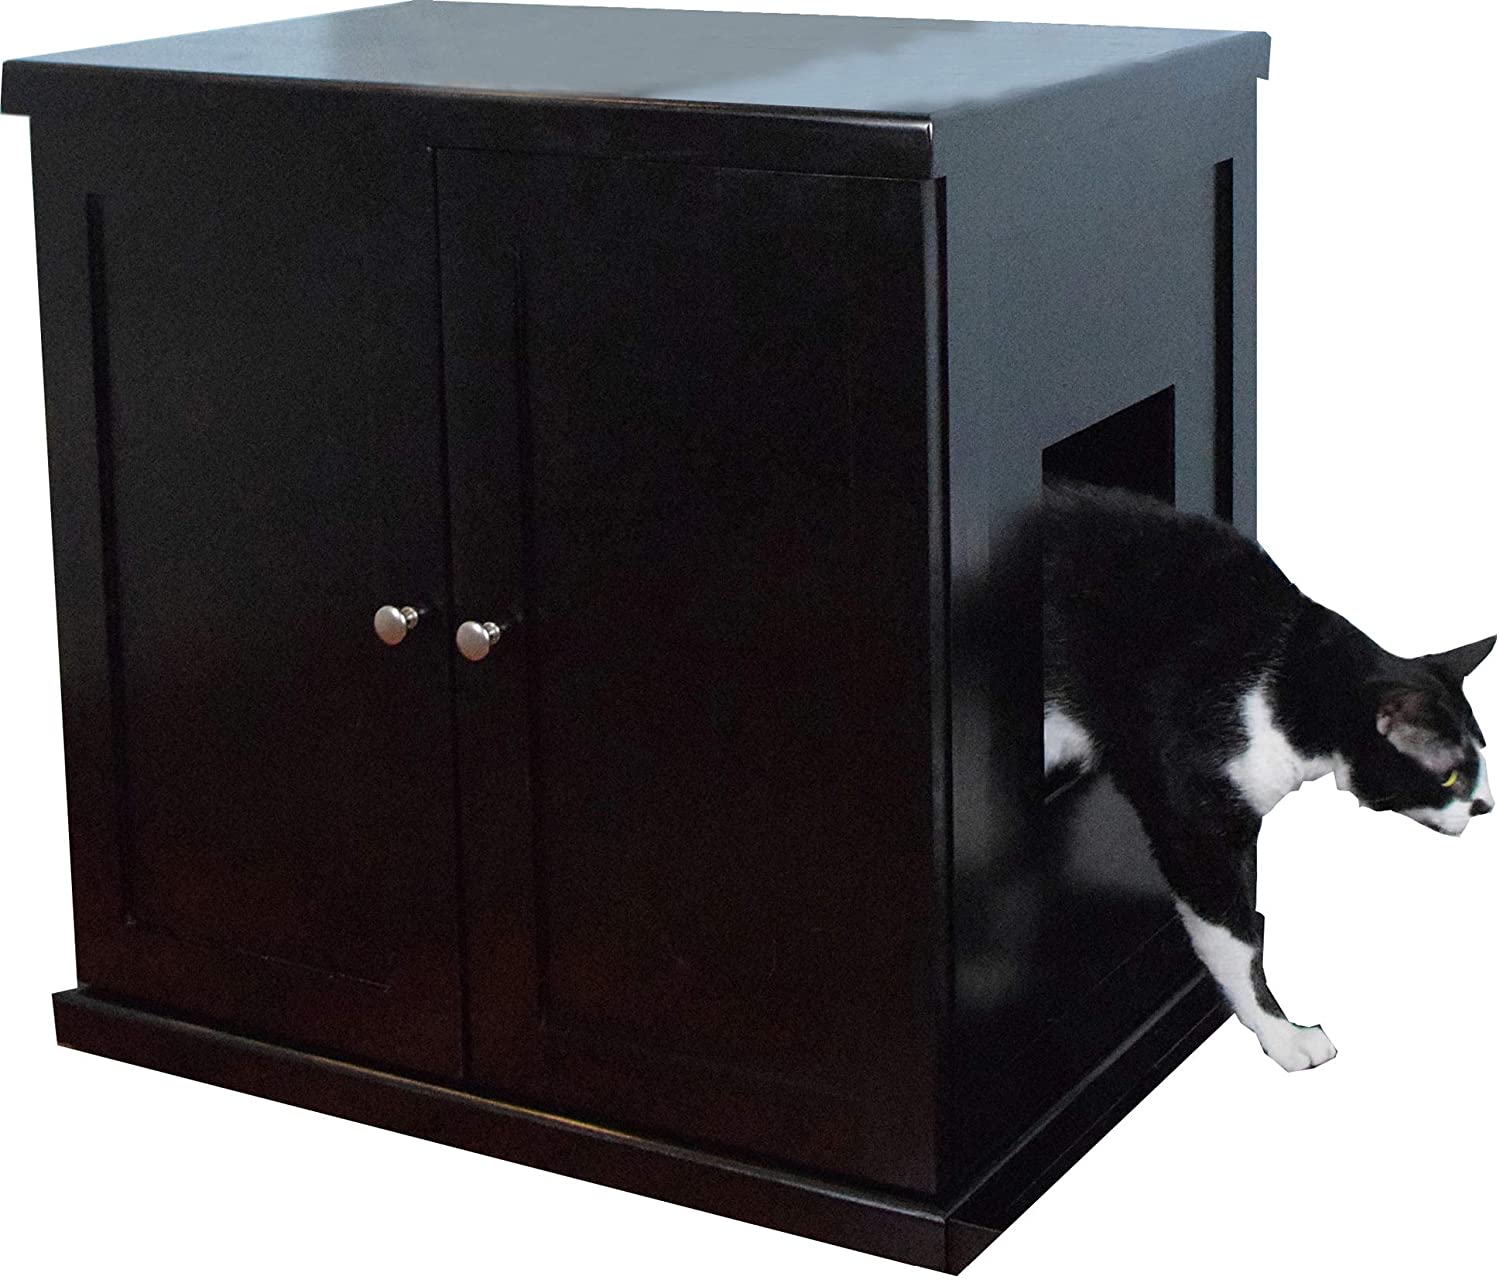 The Refined Feline Cat Litter Box